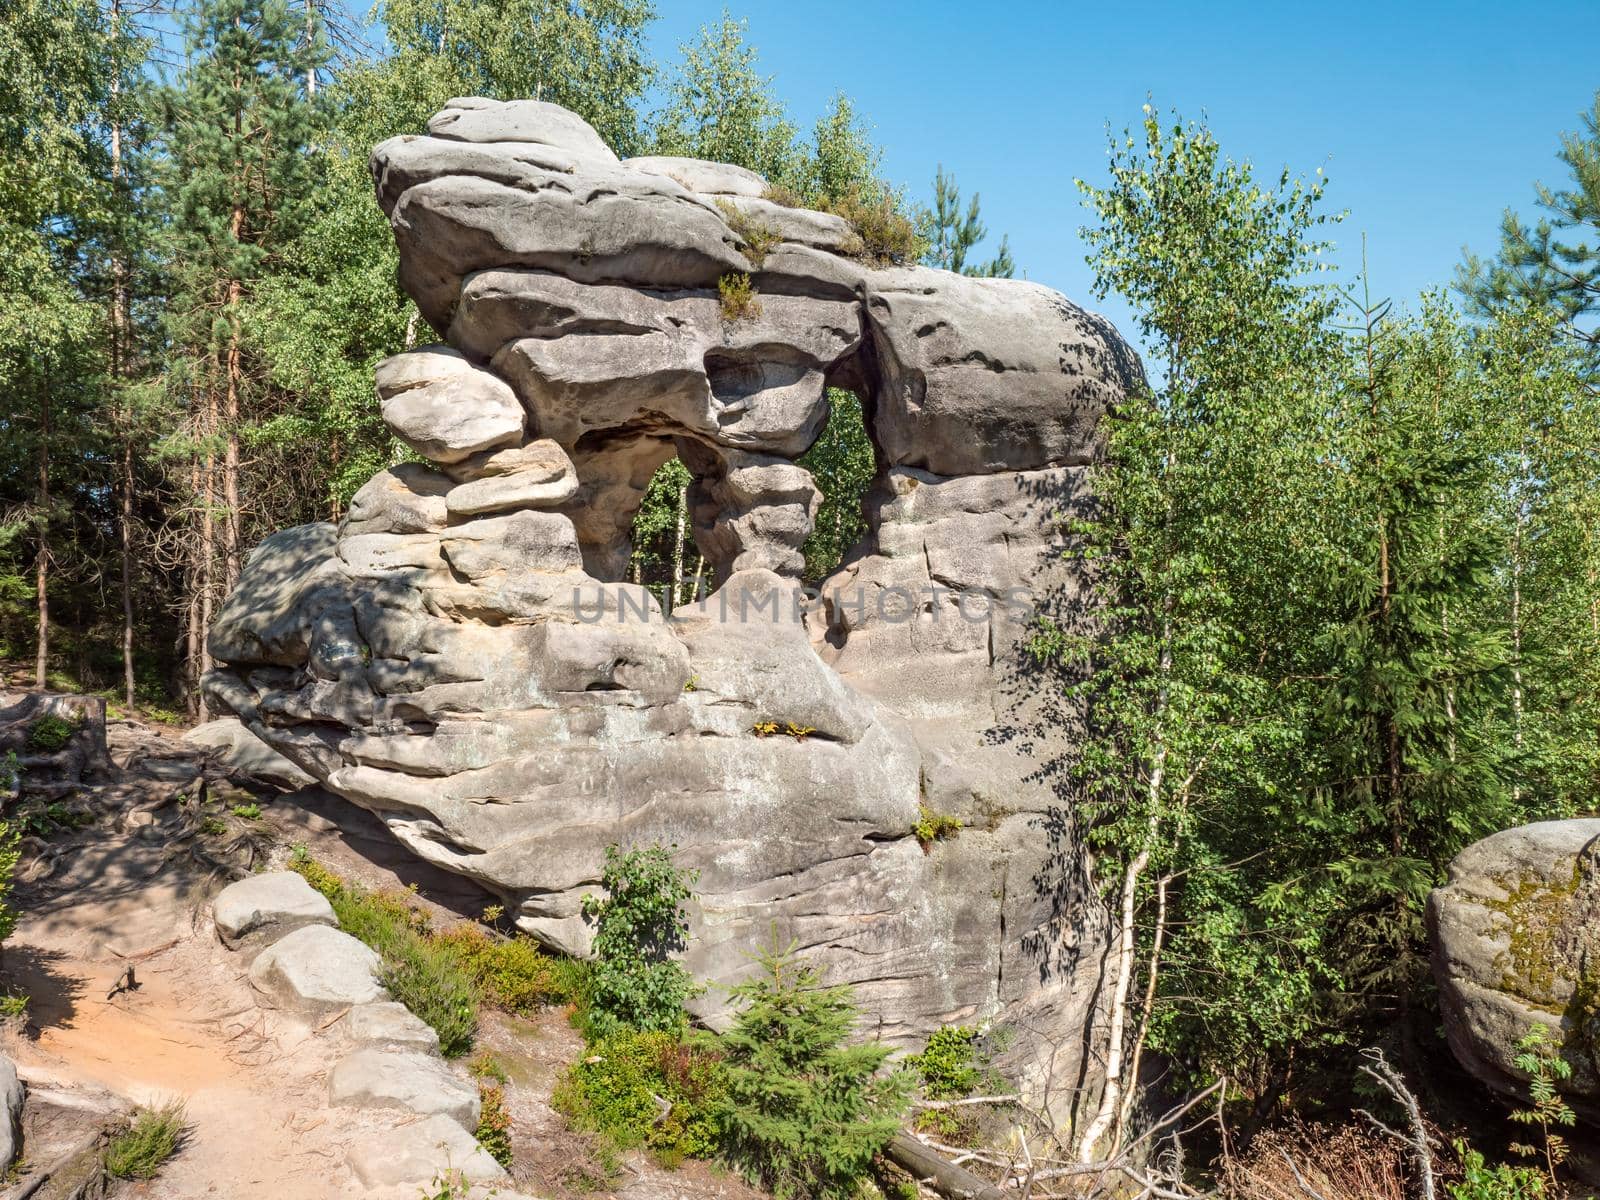 Ostas sandstone rock formations near The Ostas table mountain, Czechia. by rdonar2